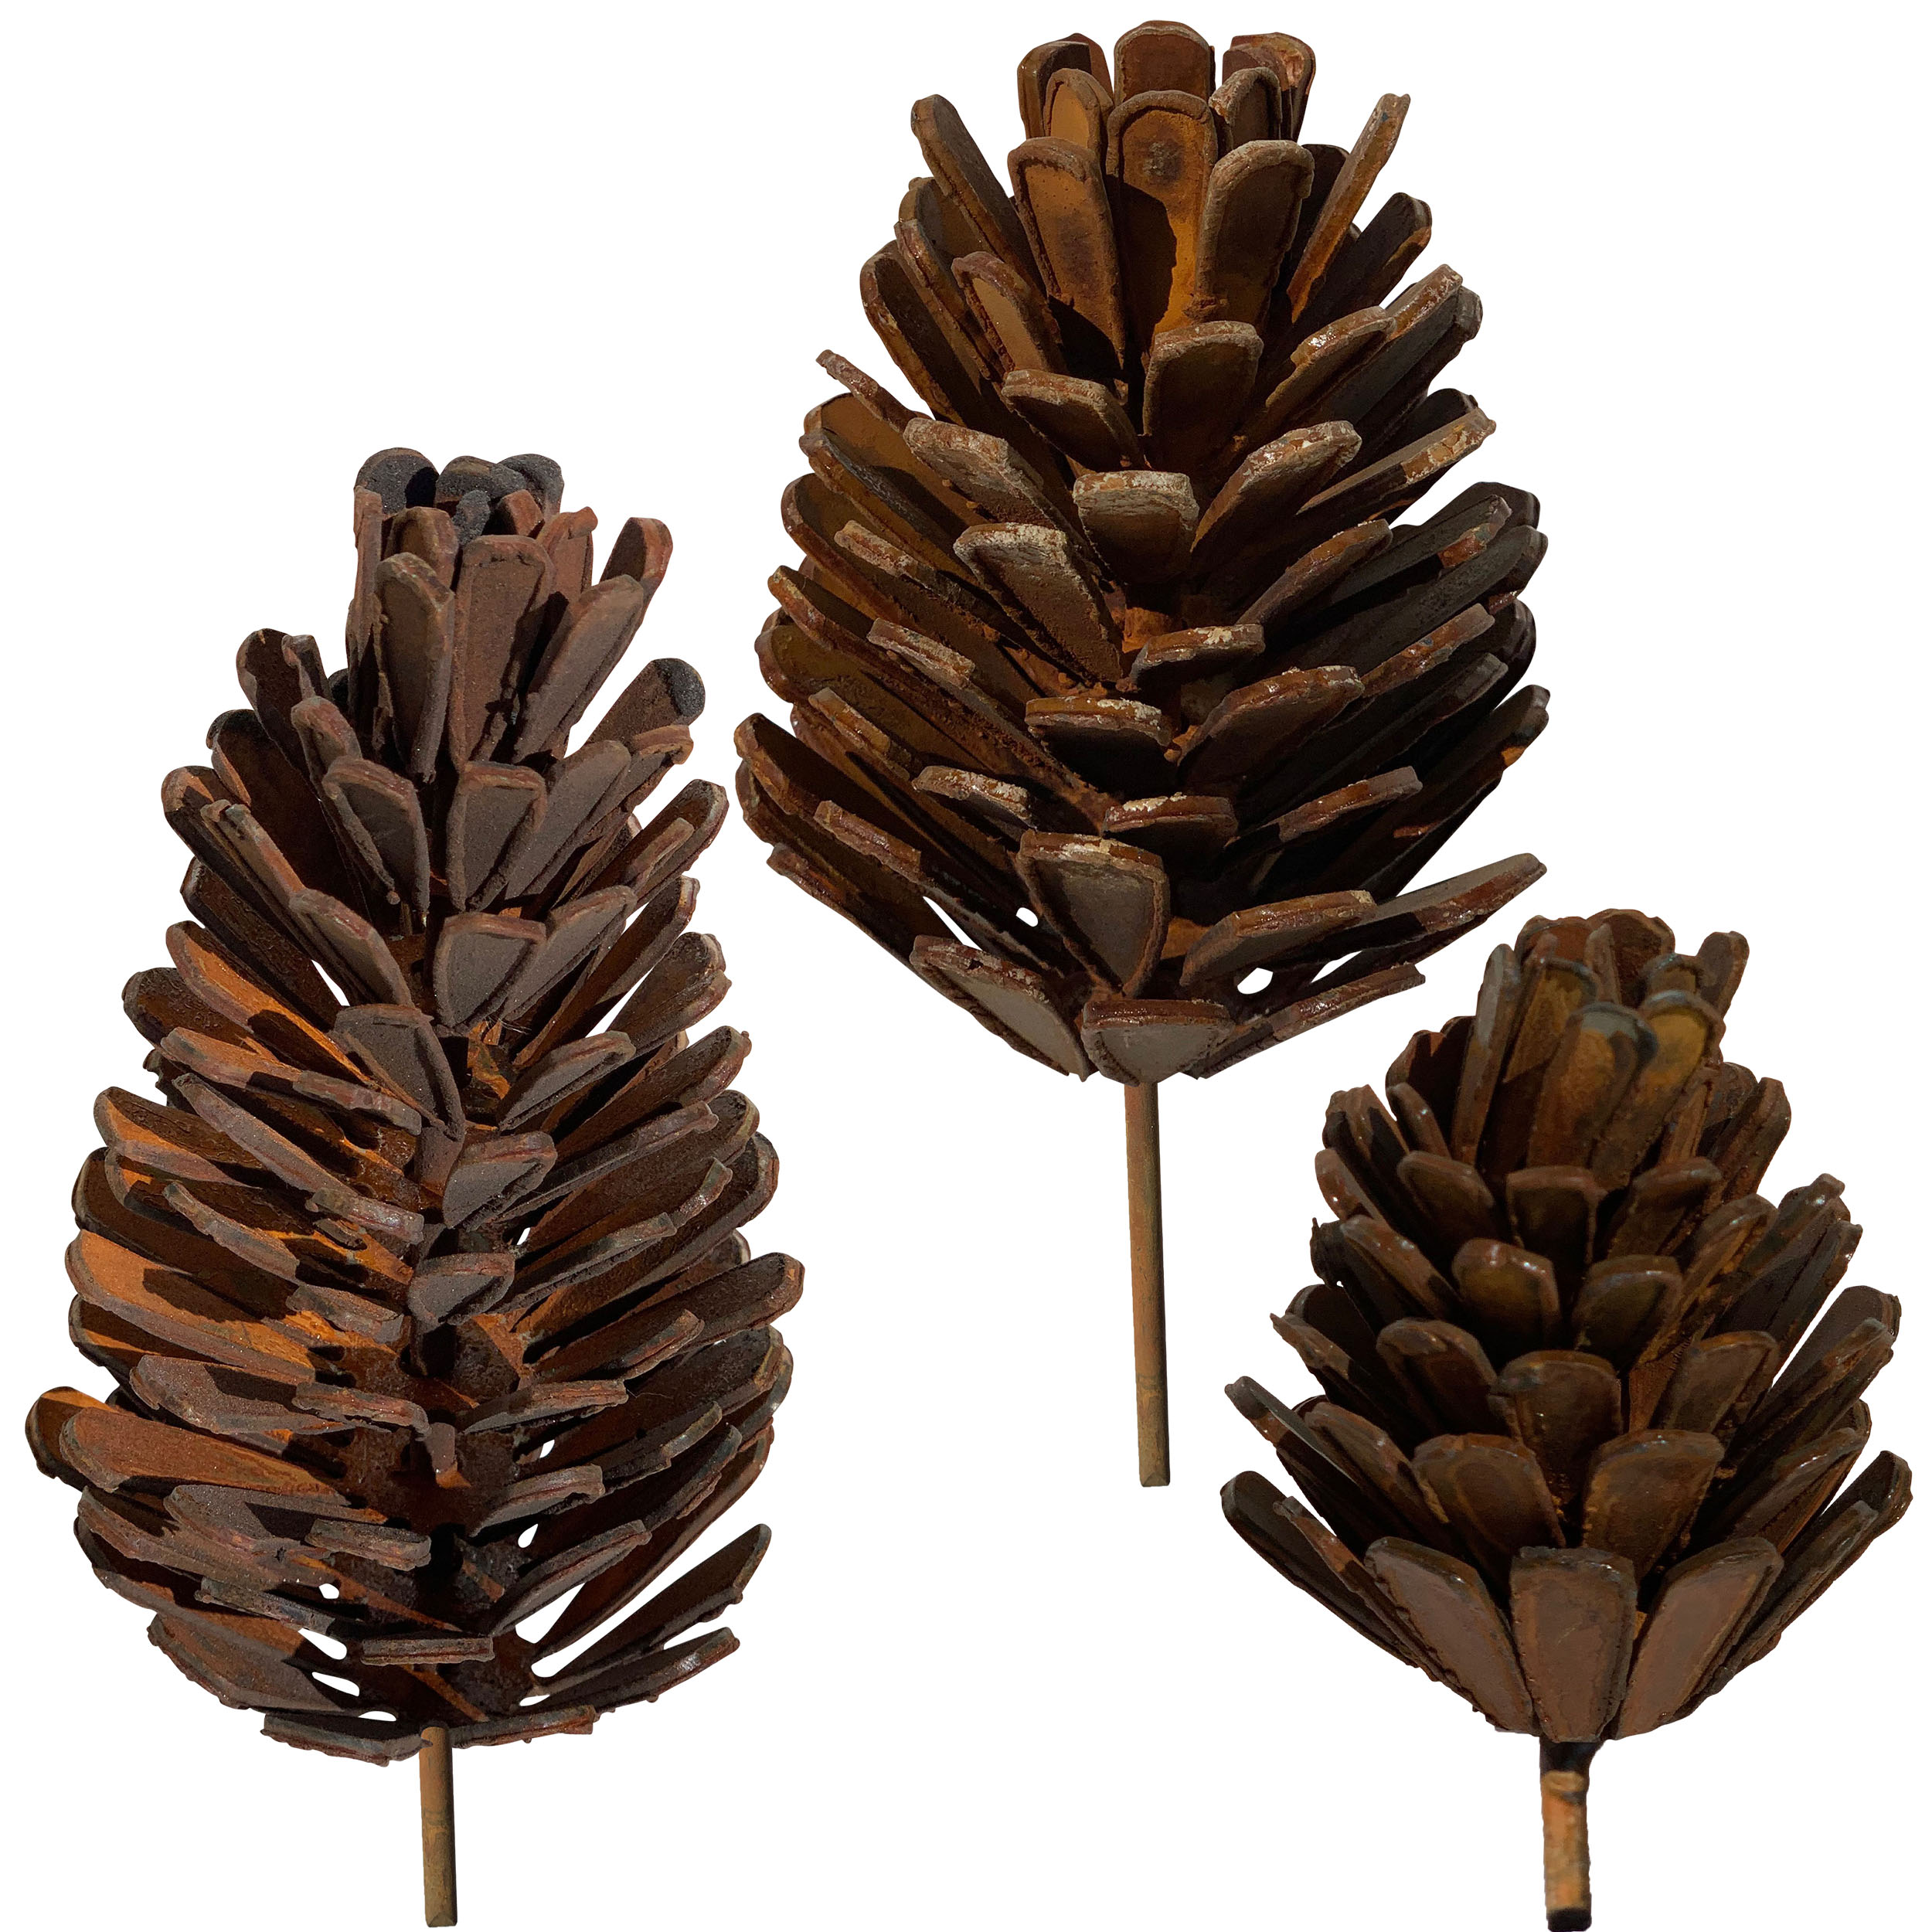 Handmade Pine Cone Metal Decor by Dugout Creek Designs